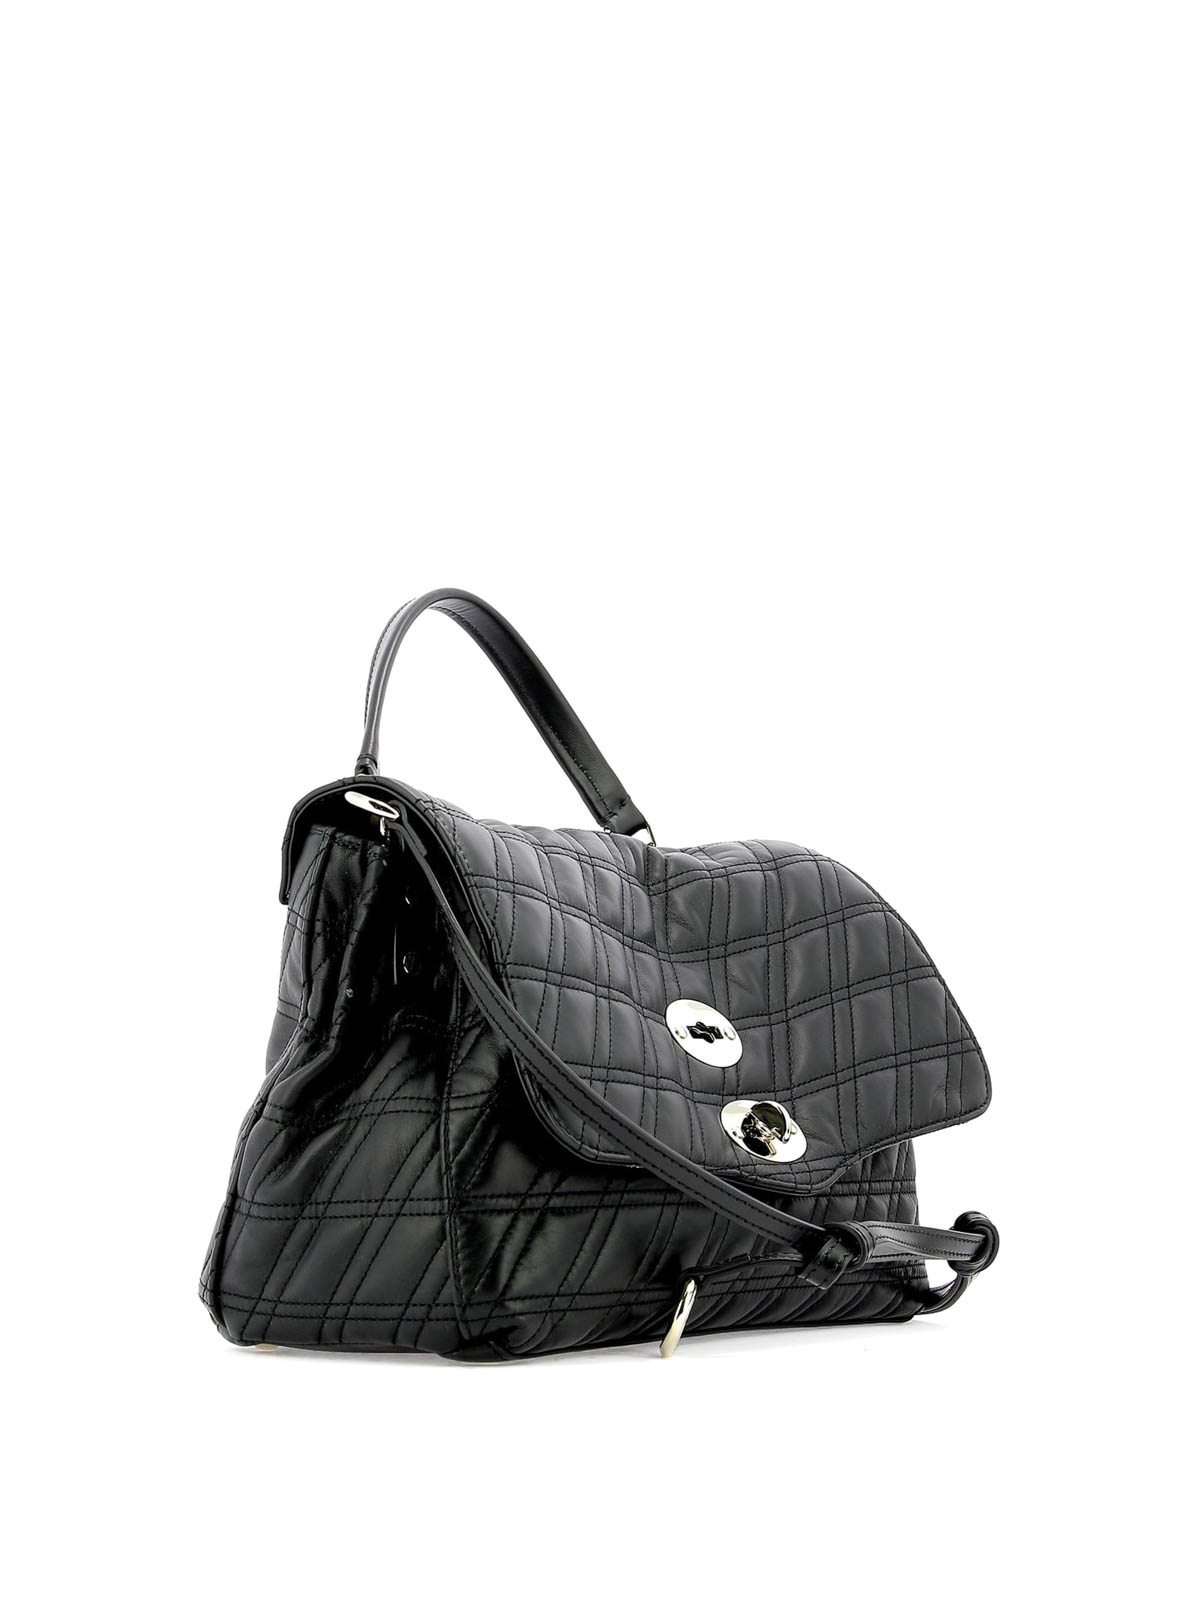 Totes bags Zanellato - Postina S Zeta black matelassé leather bag 